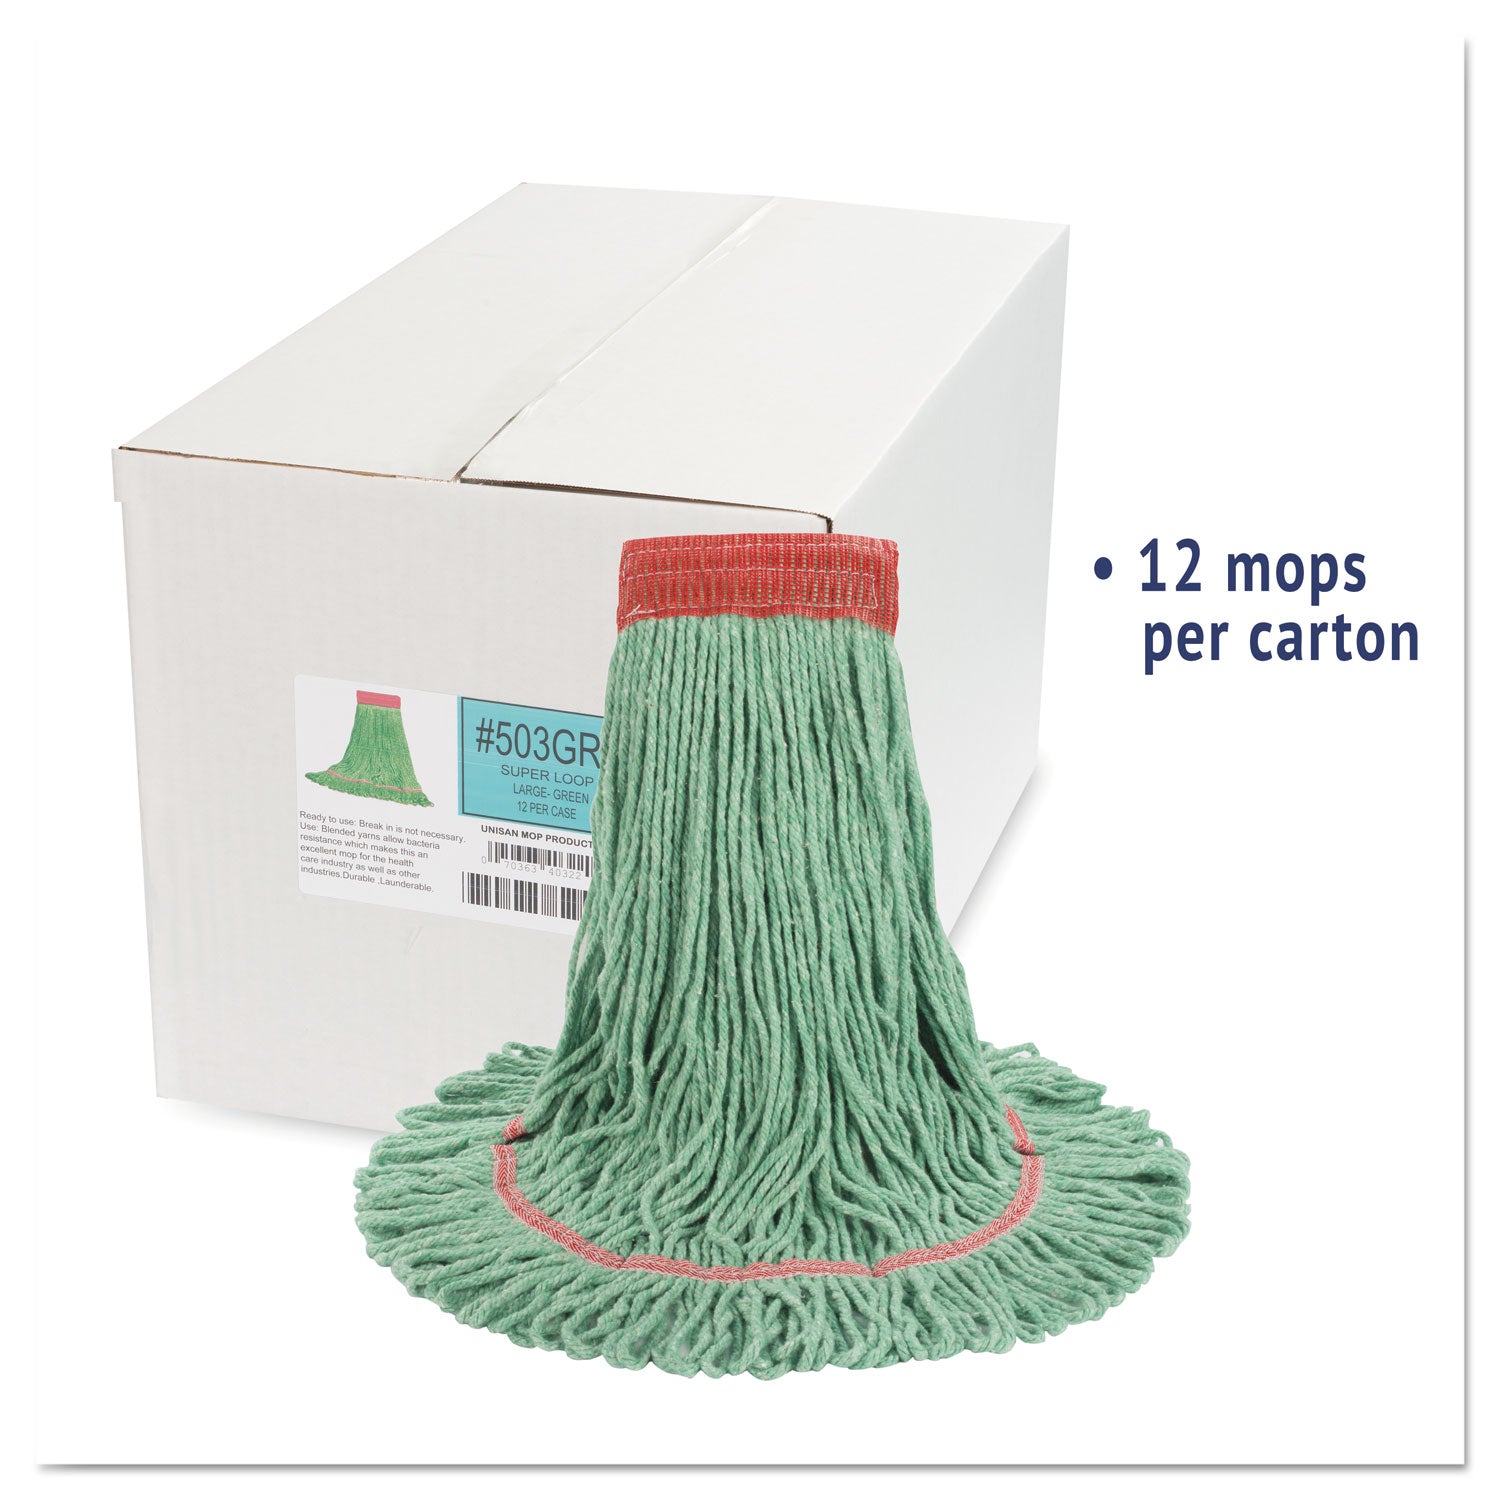 super-loop-wet-mop-head-cotton-synthetic-fiber-5-headband-large-size-green-12-carton_bwk503gnct - 2